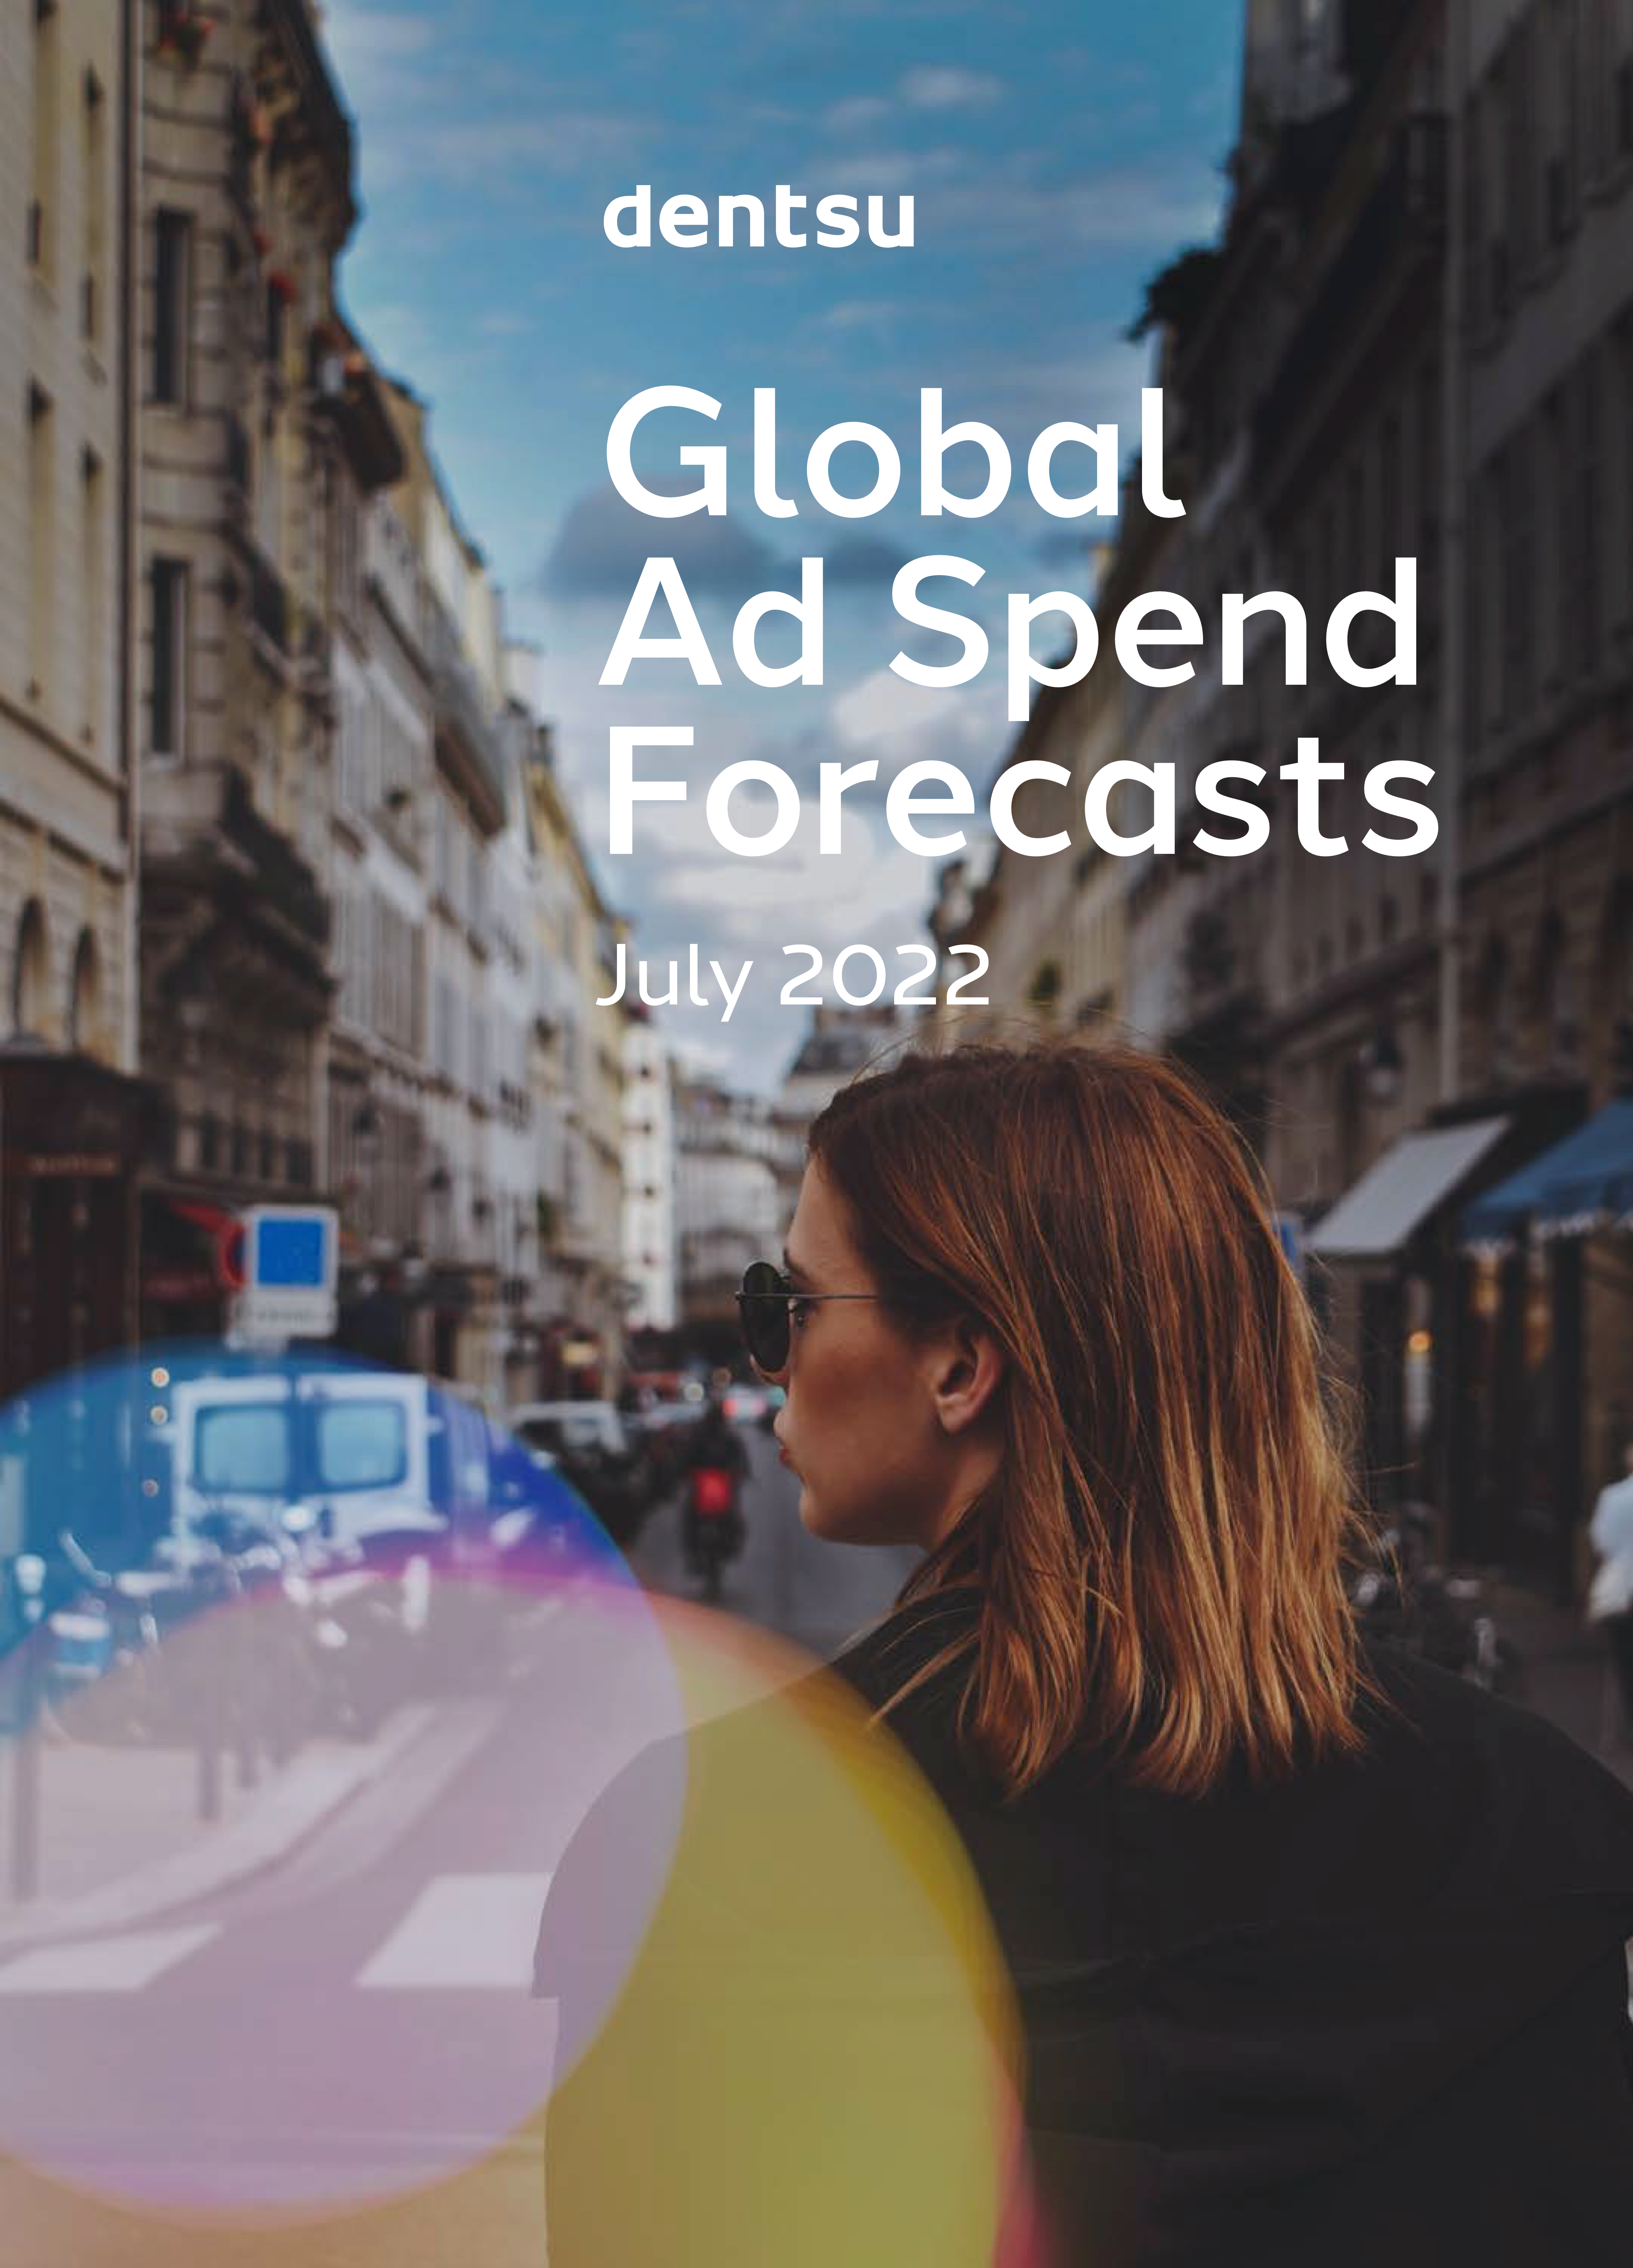 Dentsu Global Ad Spend Forecasts July 2022